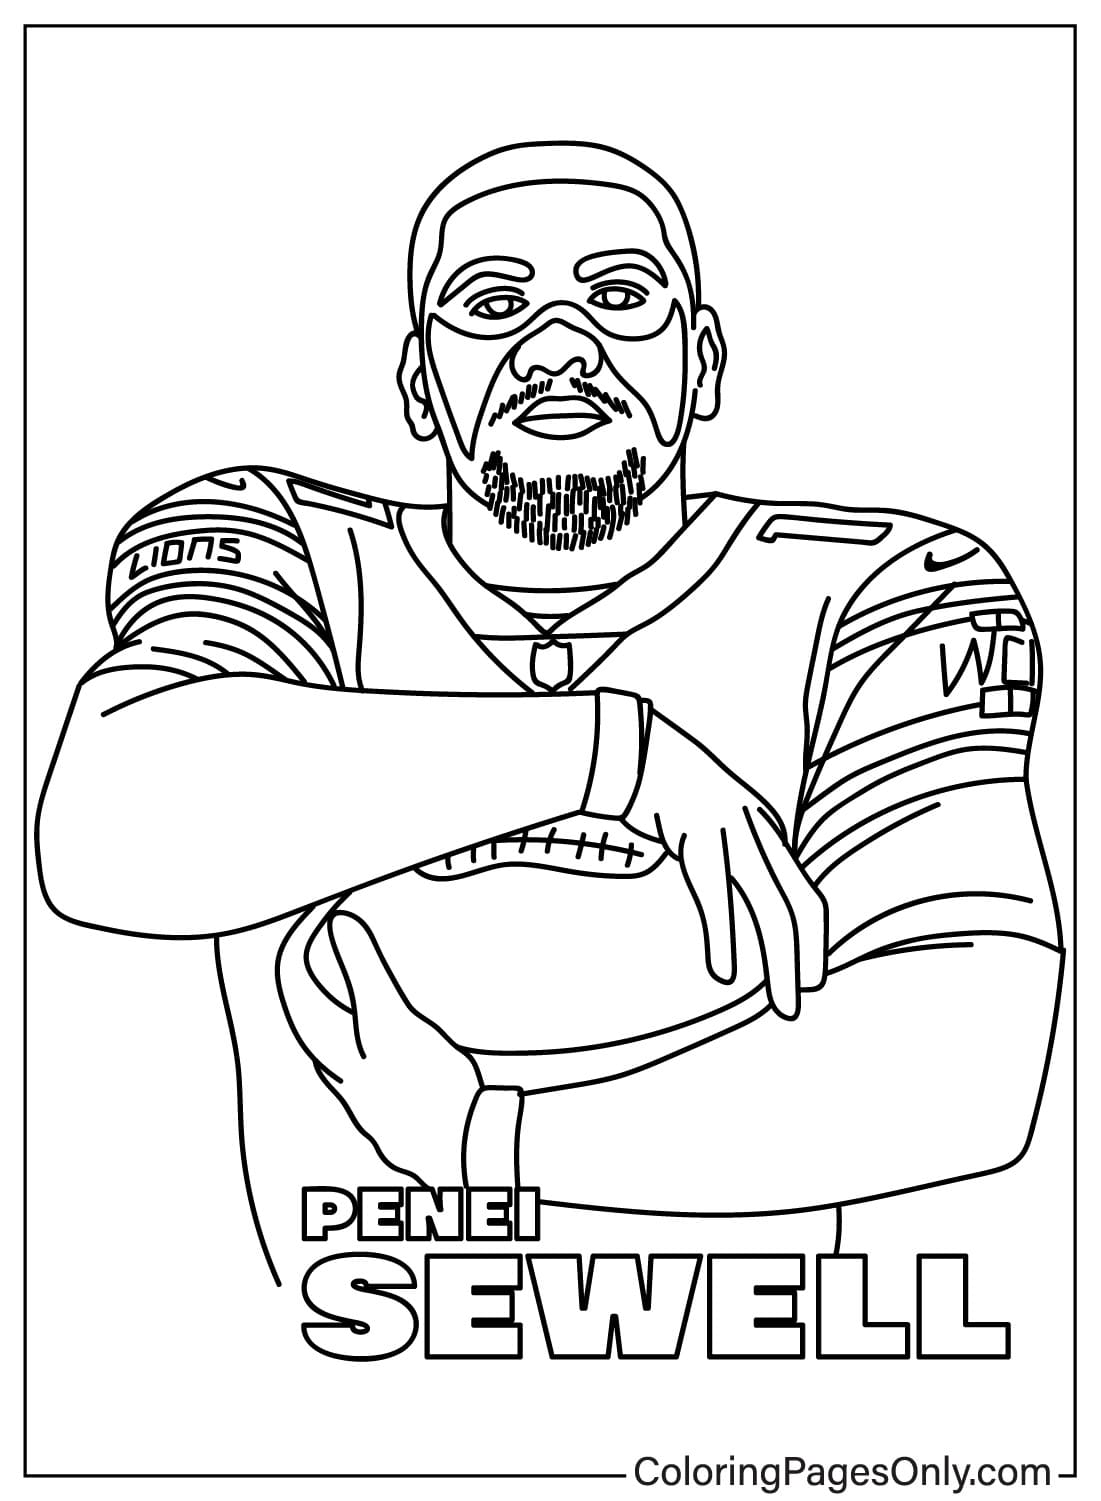 Página para colorear de Penei Sewell de los Detroit Lions